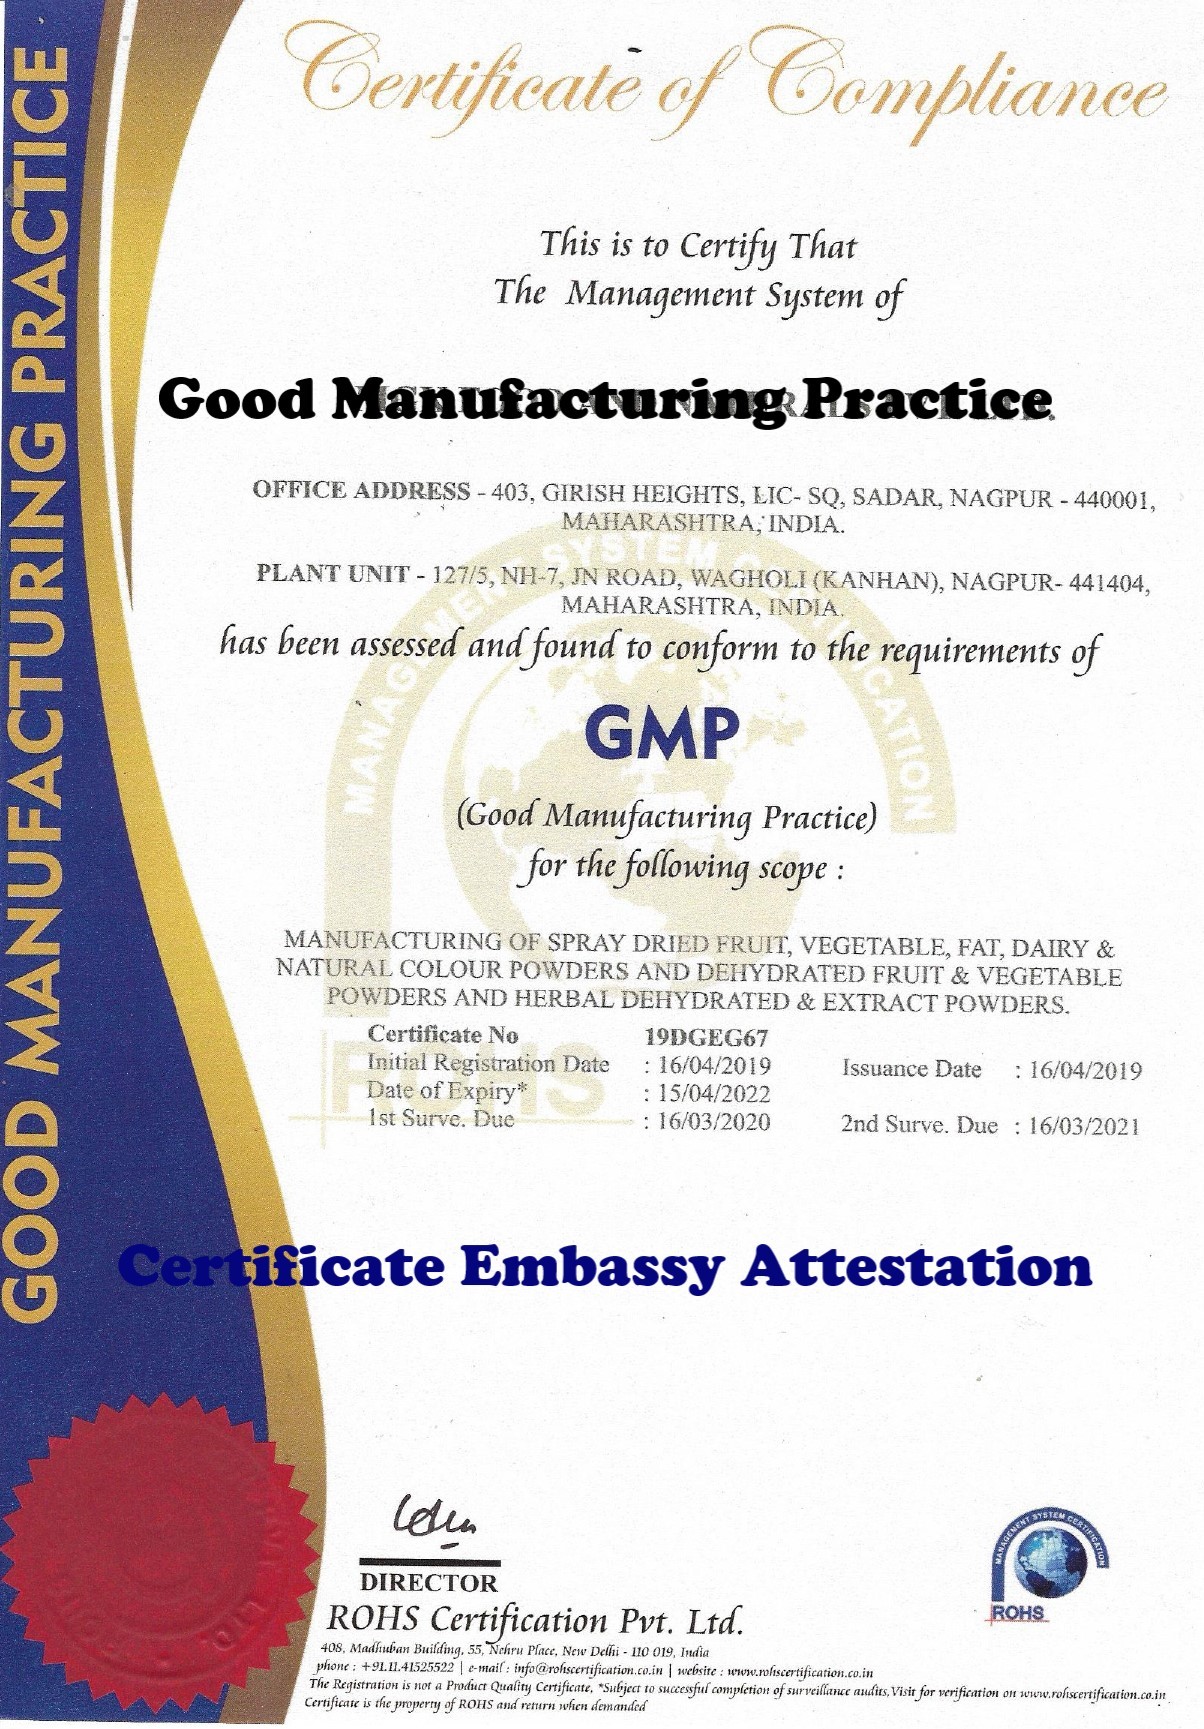 GMP Certificate Attestation from Ecuador Embassy